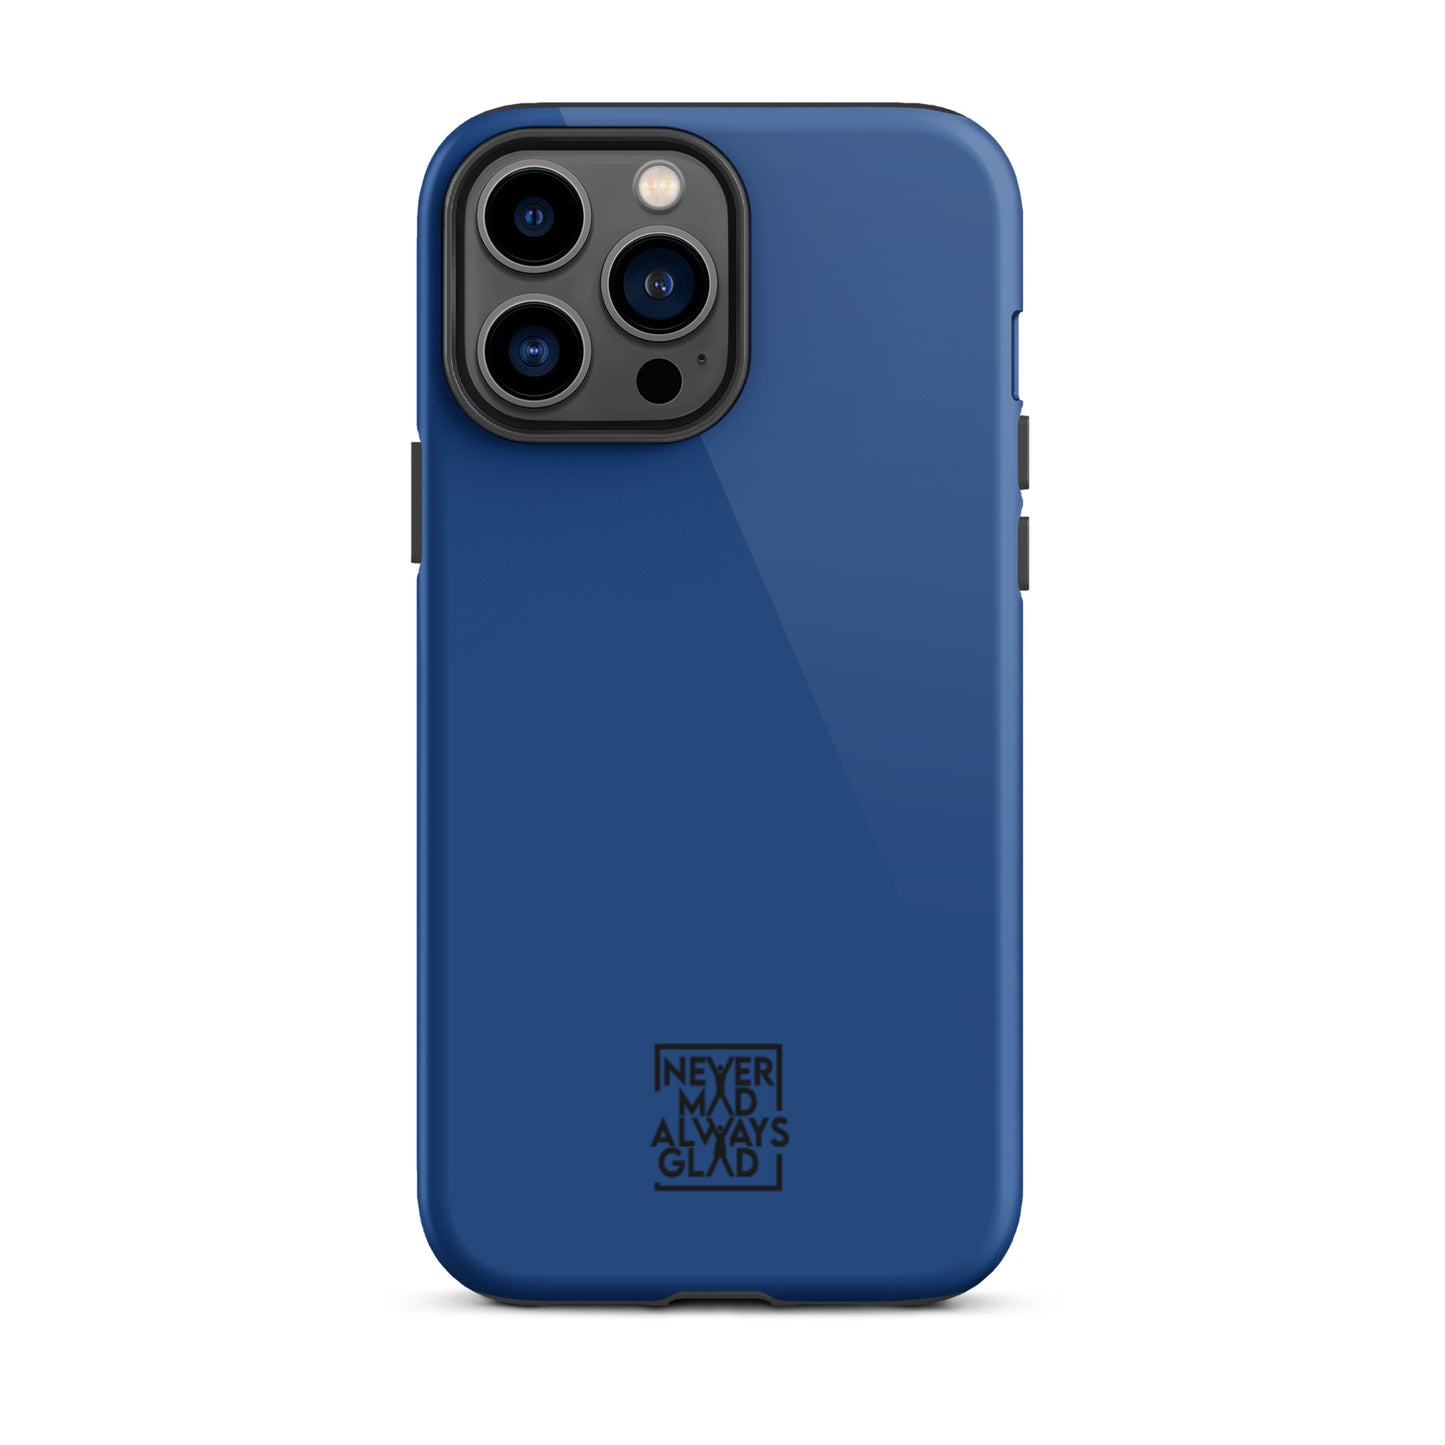 NMAG Blue Tough iPhone case